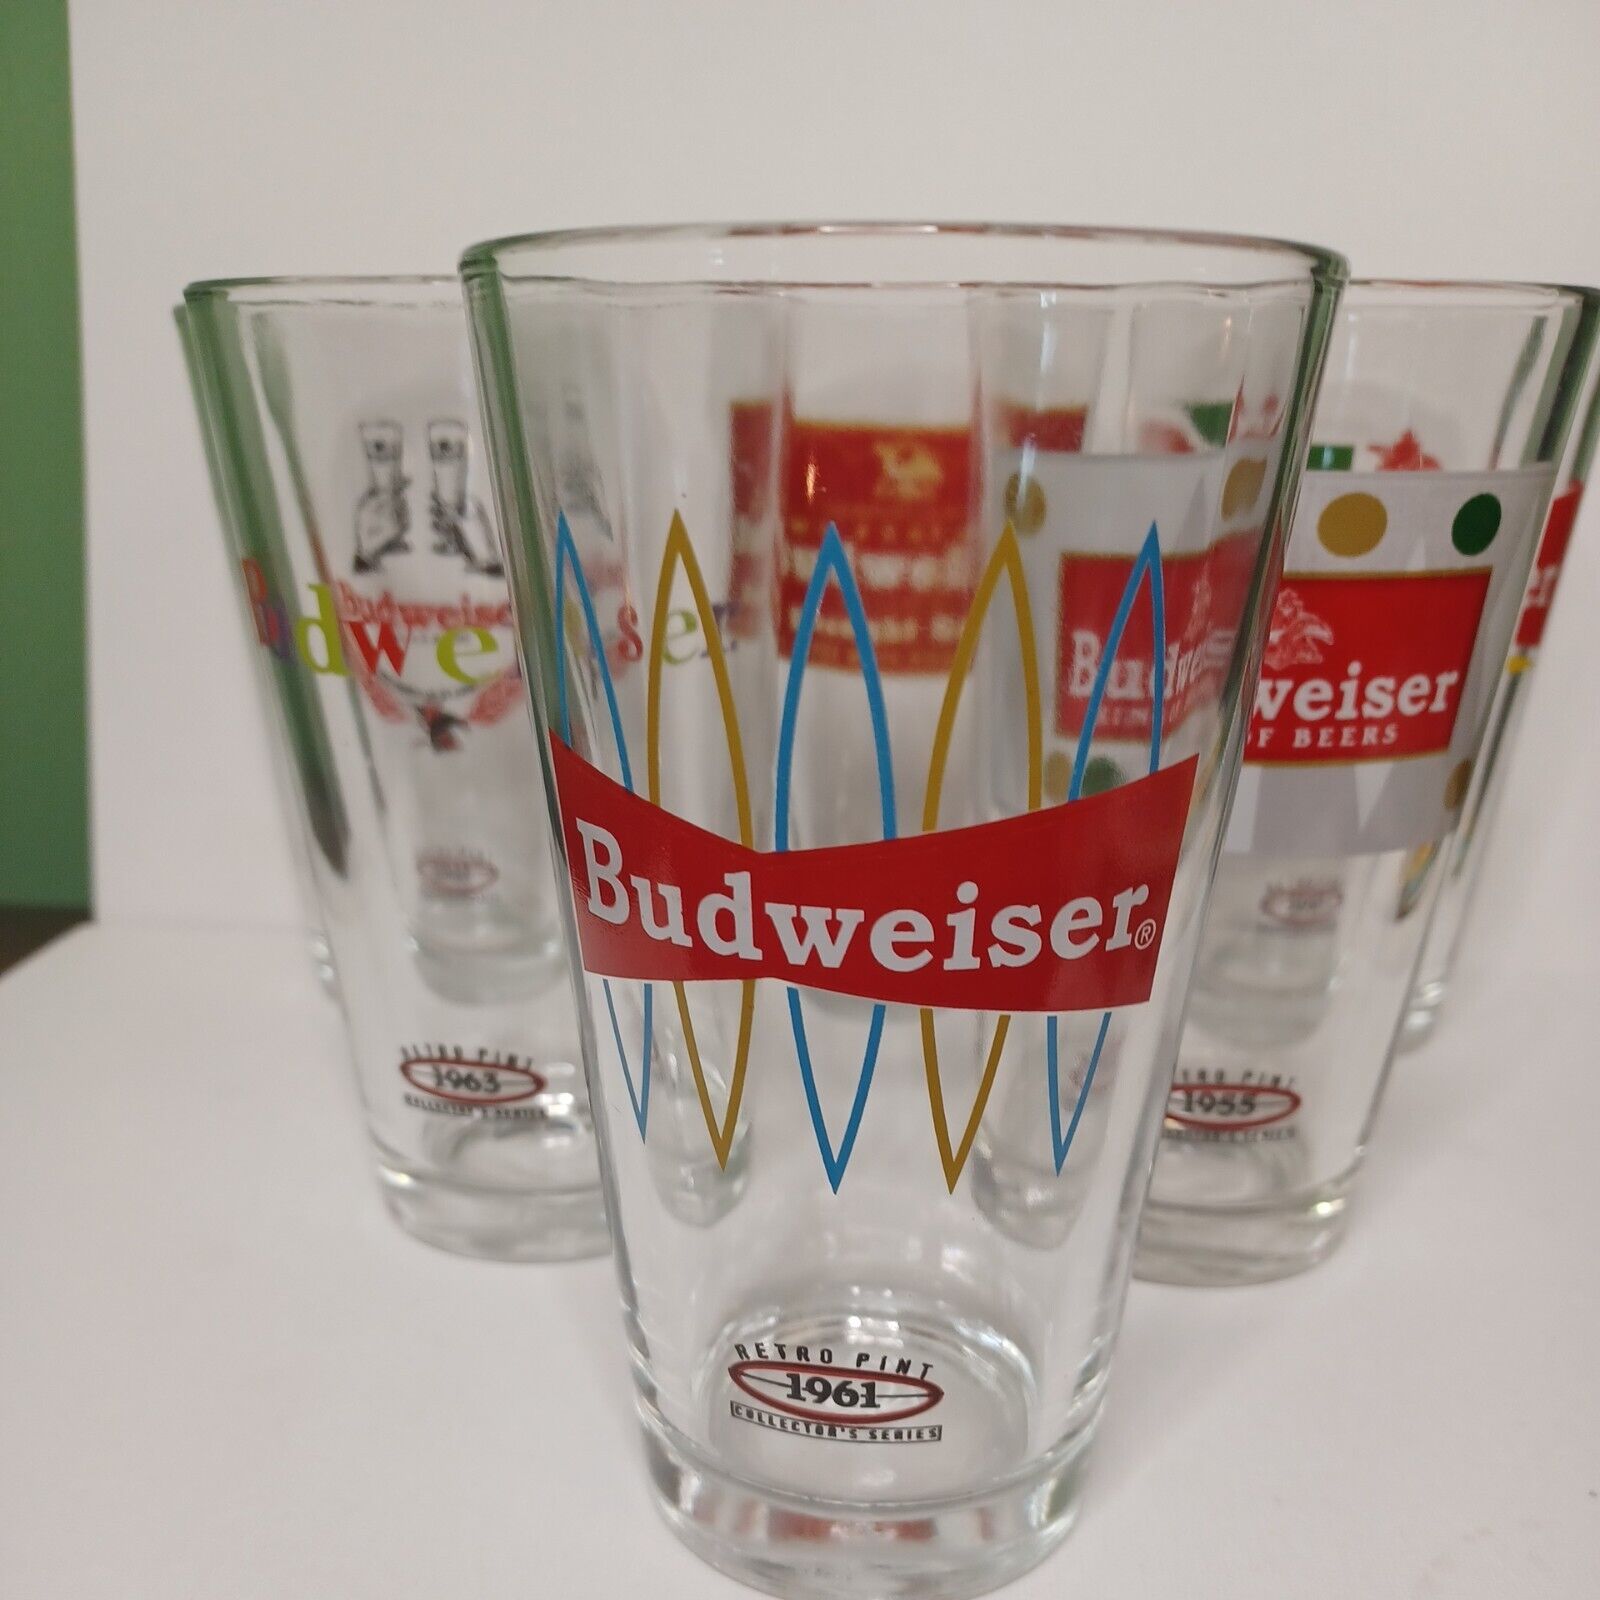 Budweiser Retro Pint Glass Set of  Beer Mugs Vintage Styled 14 oz